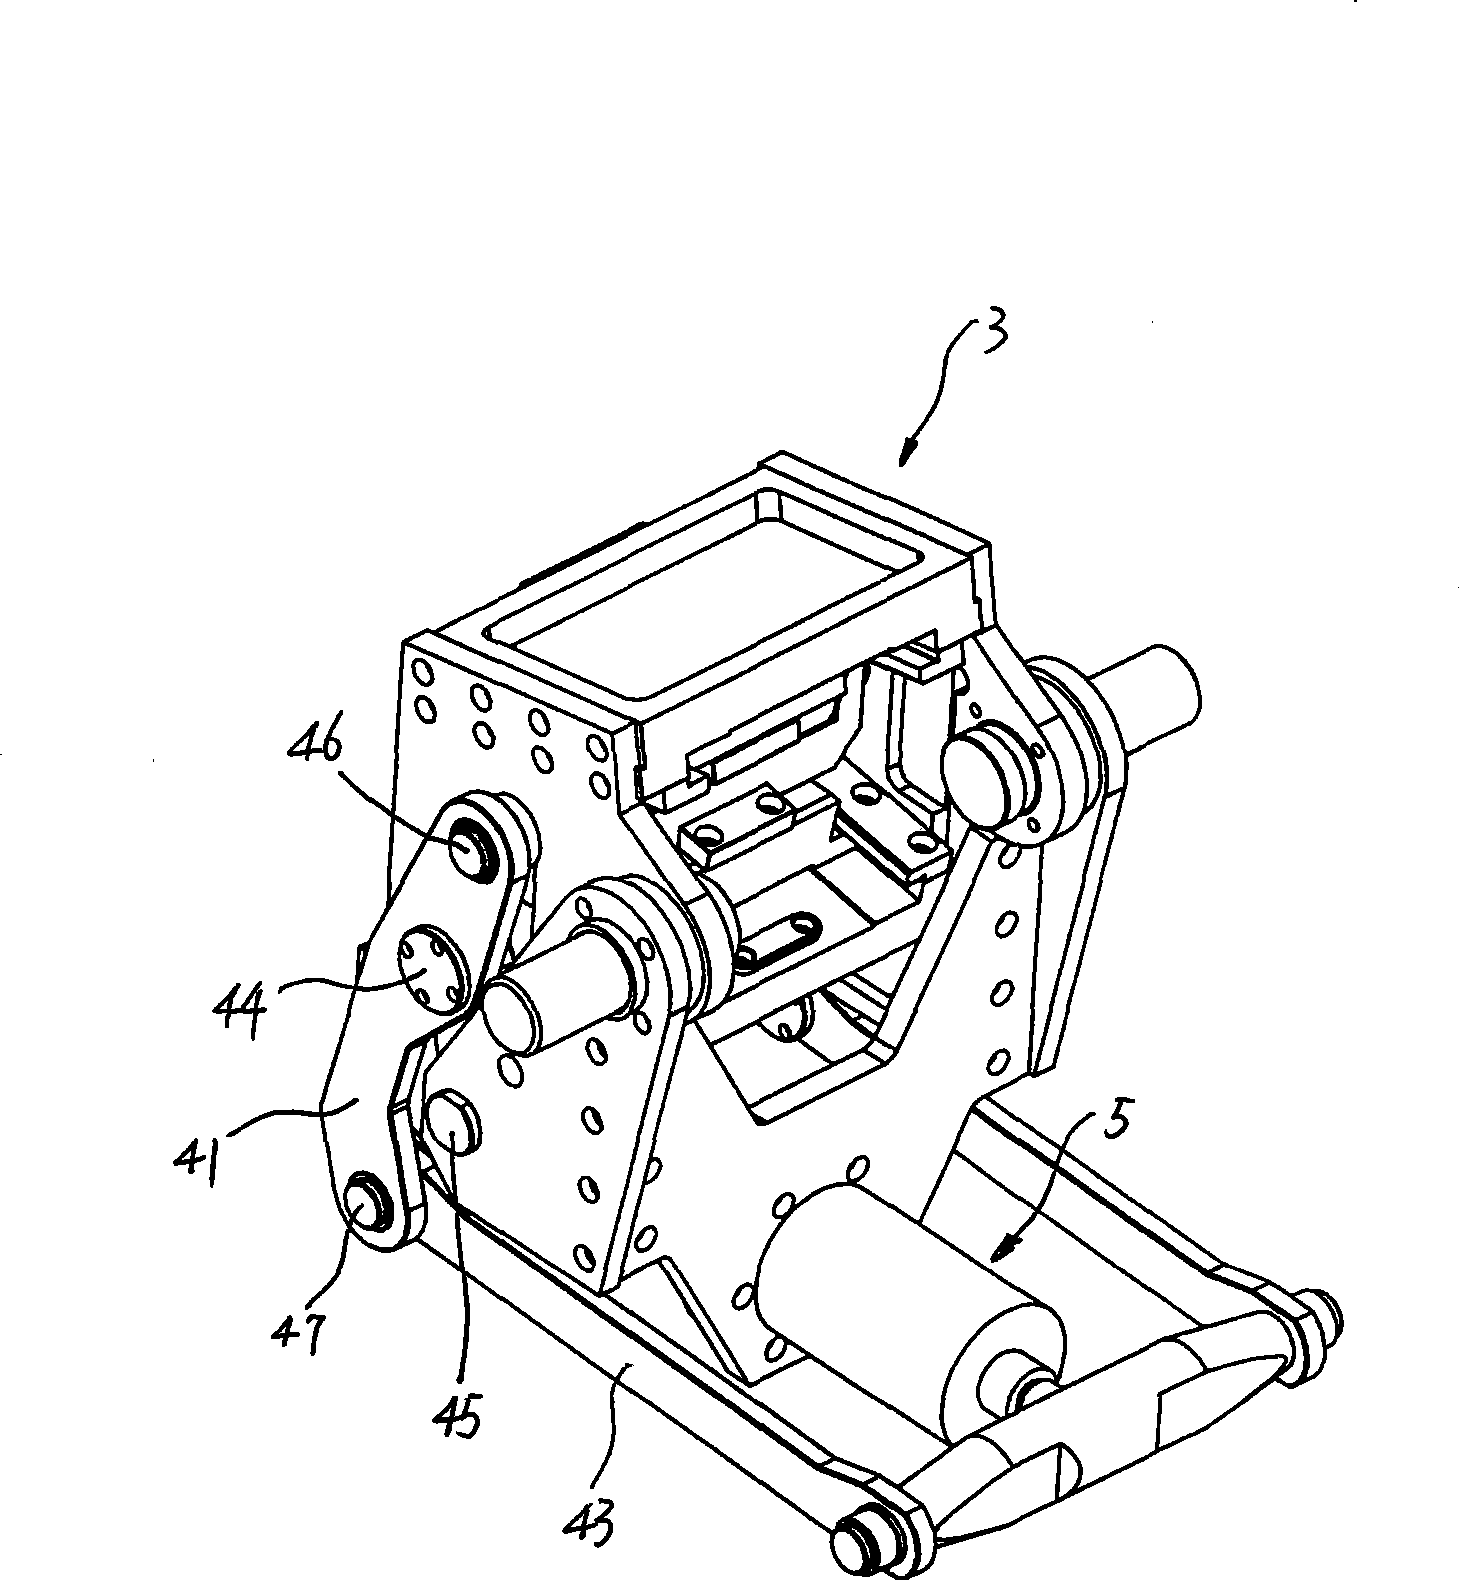 Hydraulic clamping head of rotating bending drawframe